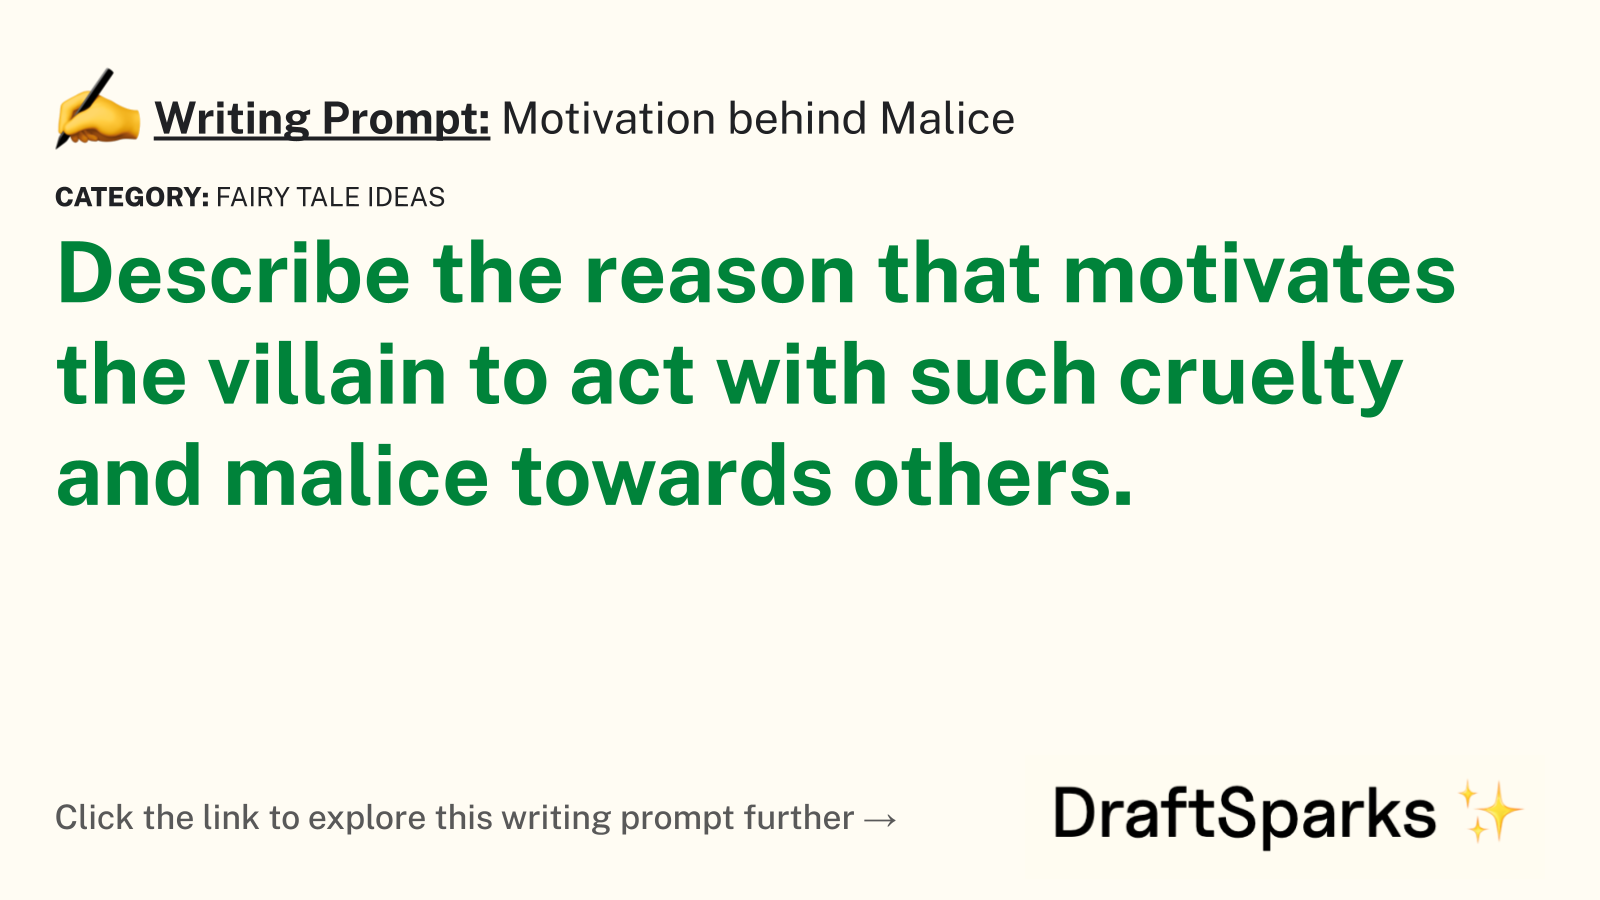 Motivation behind Malice